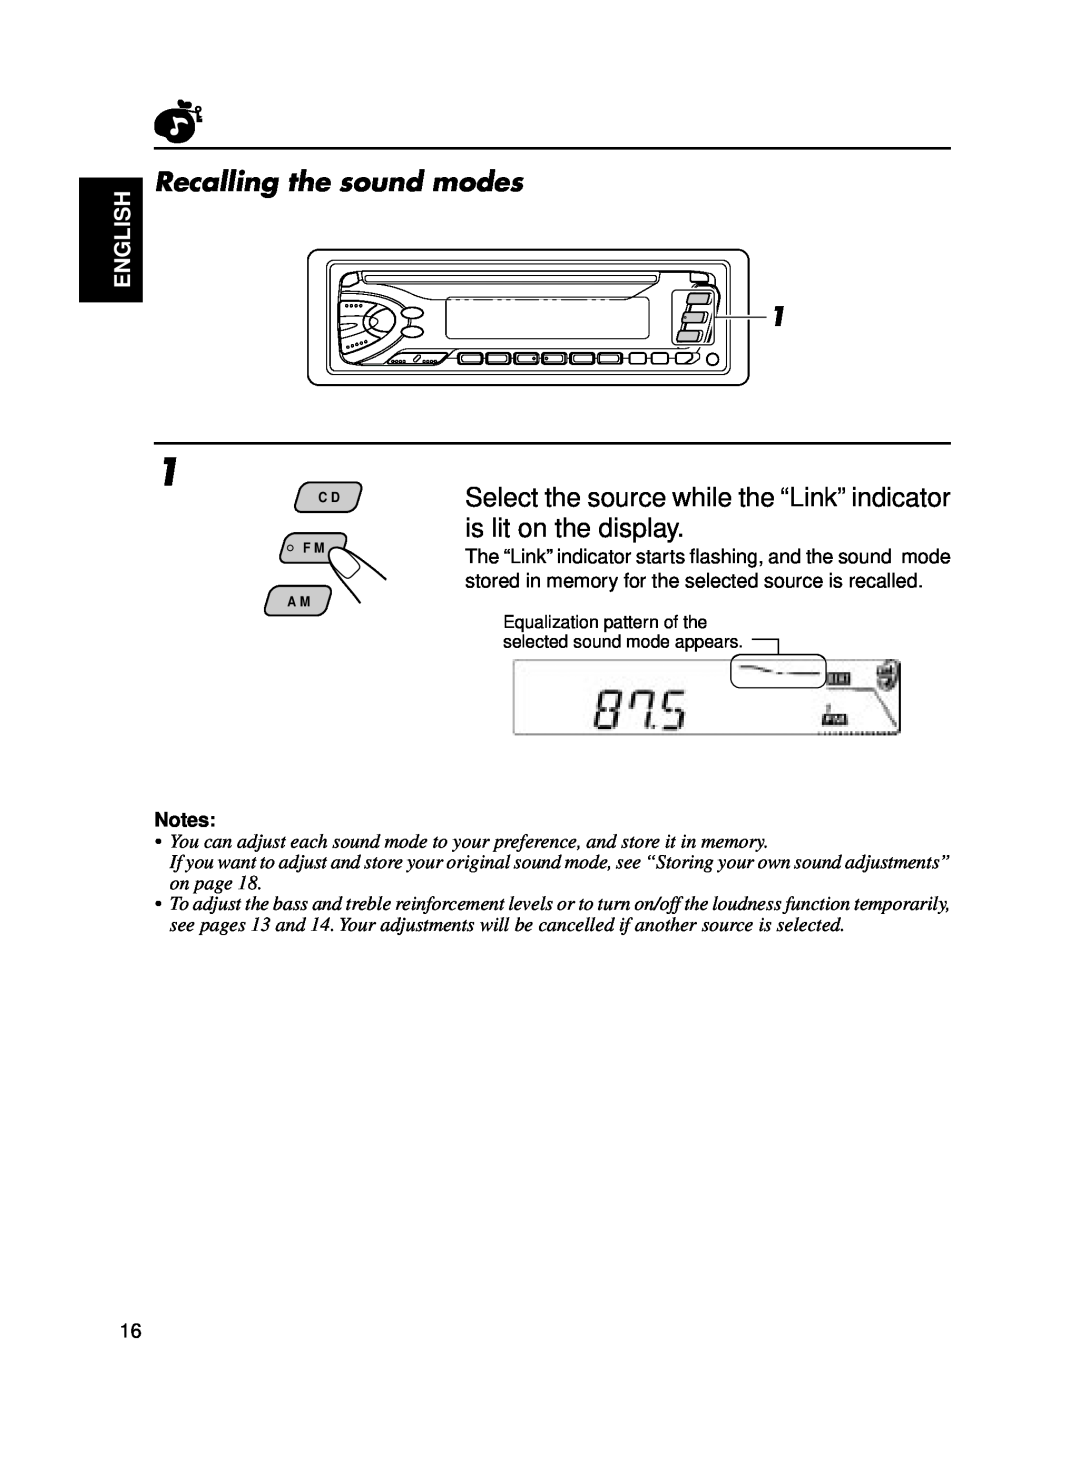 JVC KD-S550, KD-S600 manual Recalling the sound modes, English, C D F M A M 